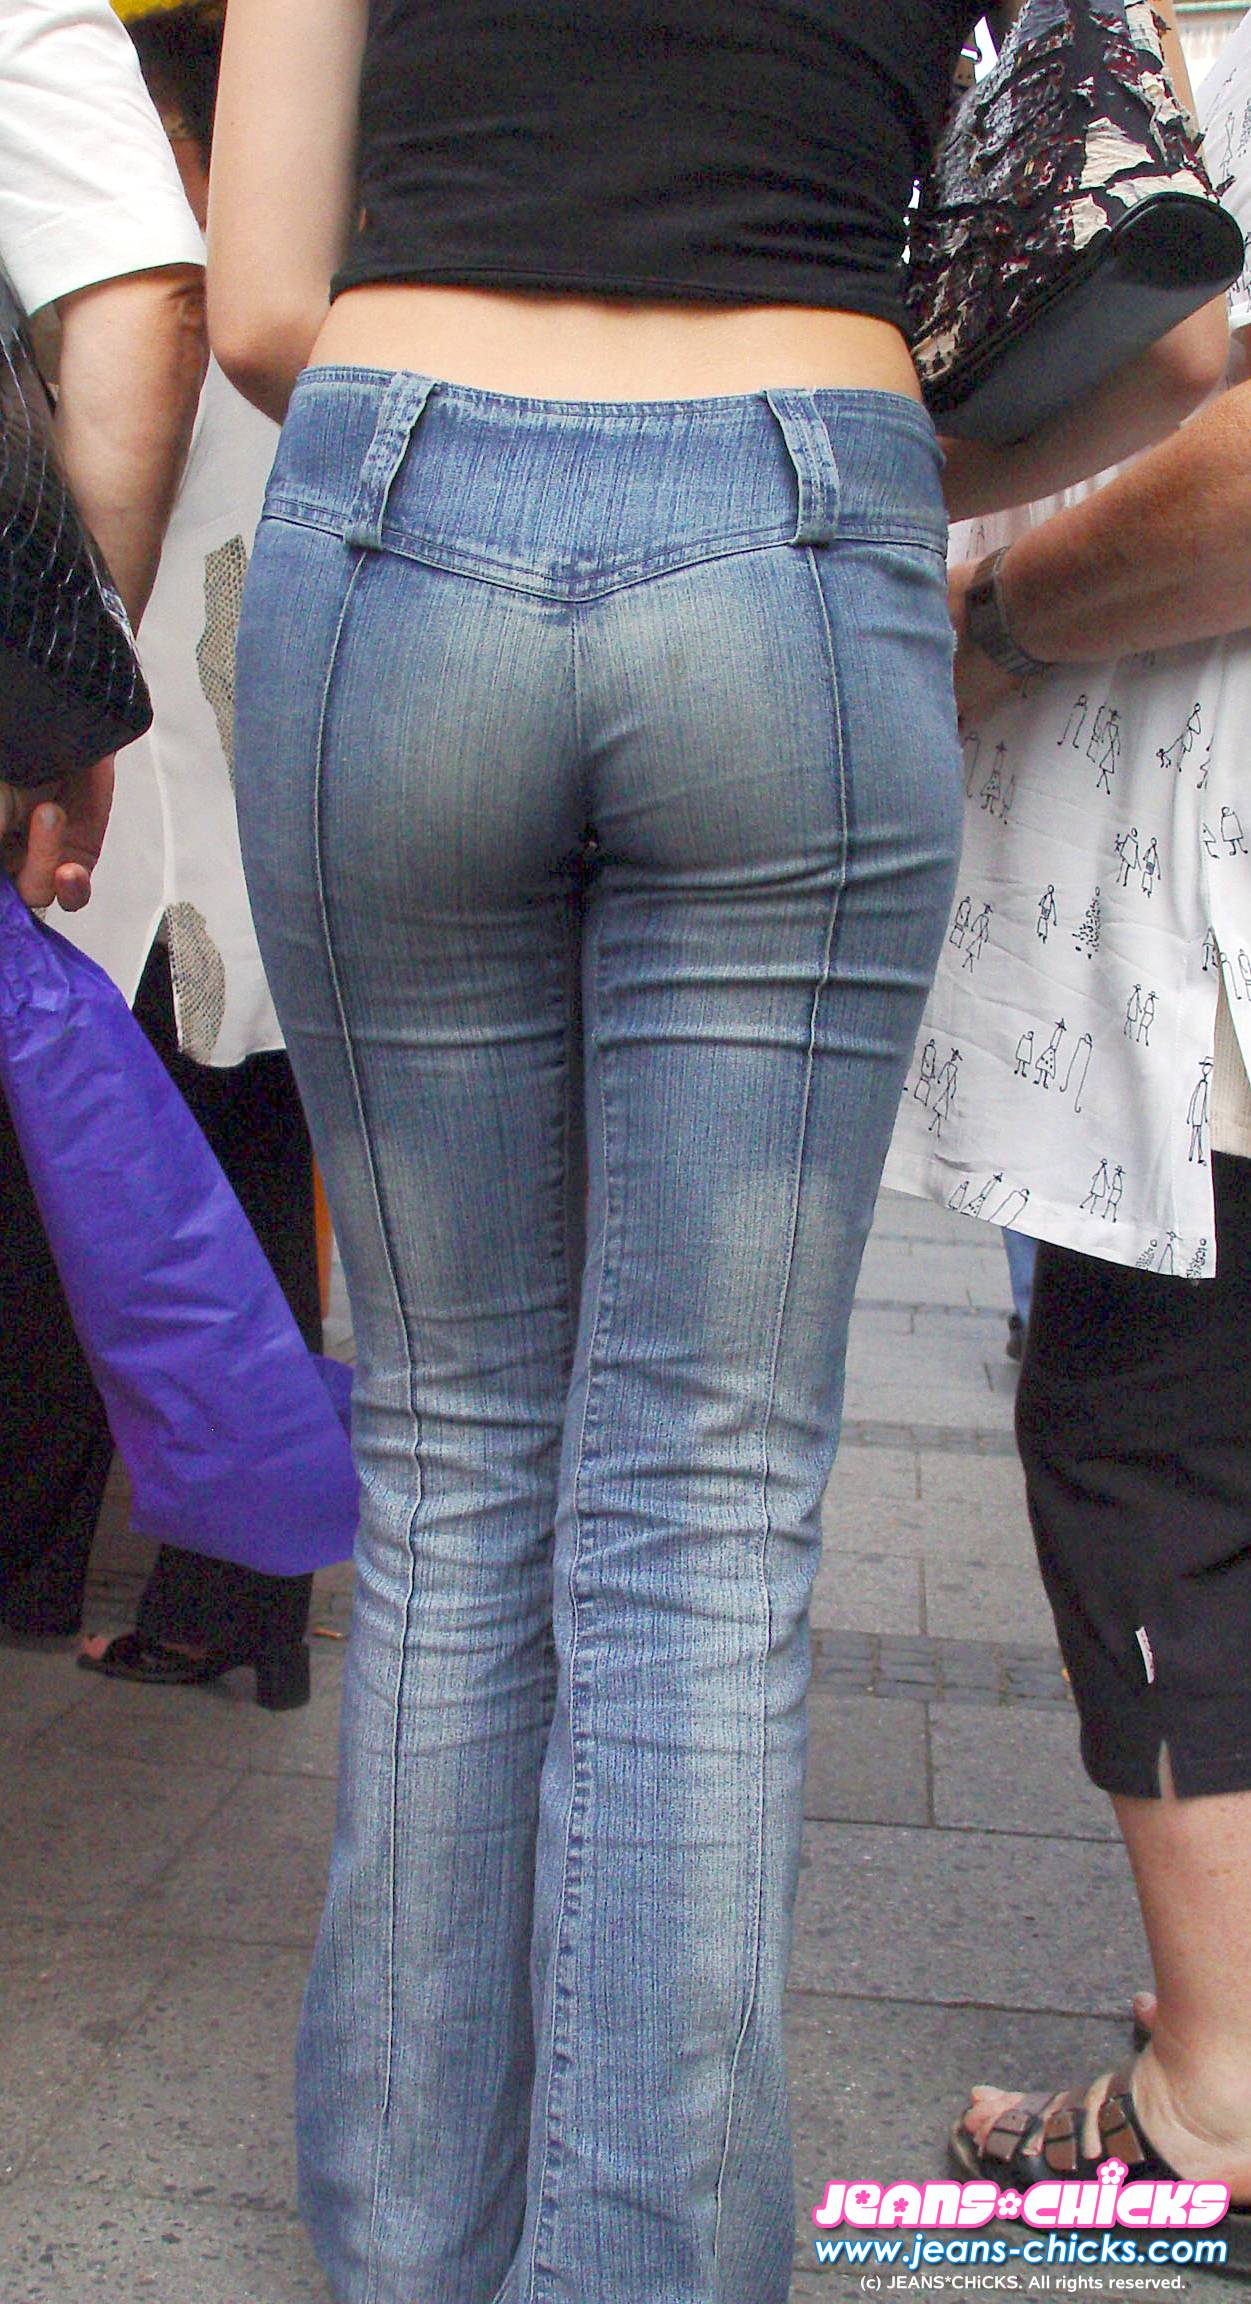 Ass Jeans Pics 41